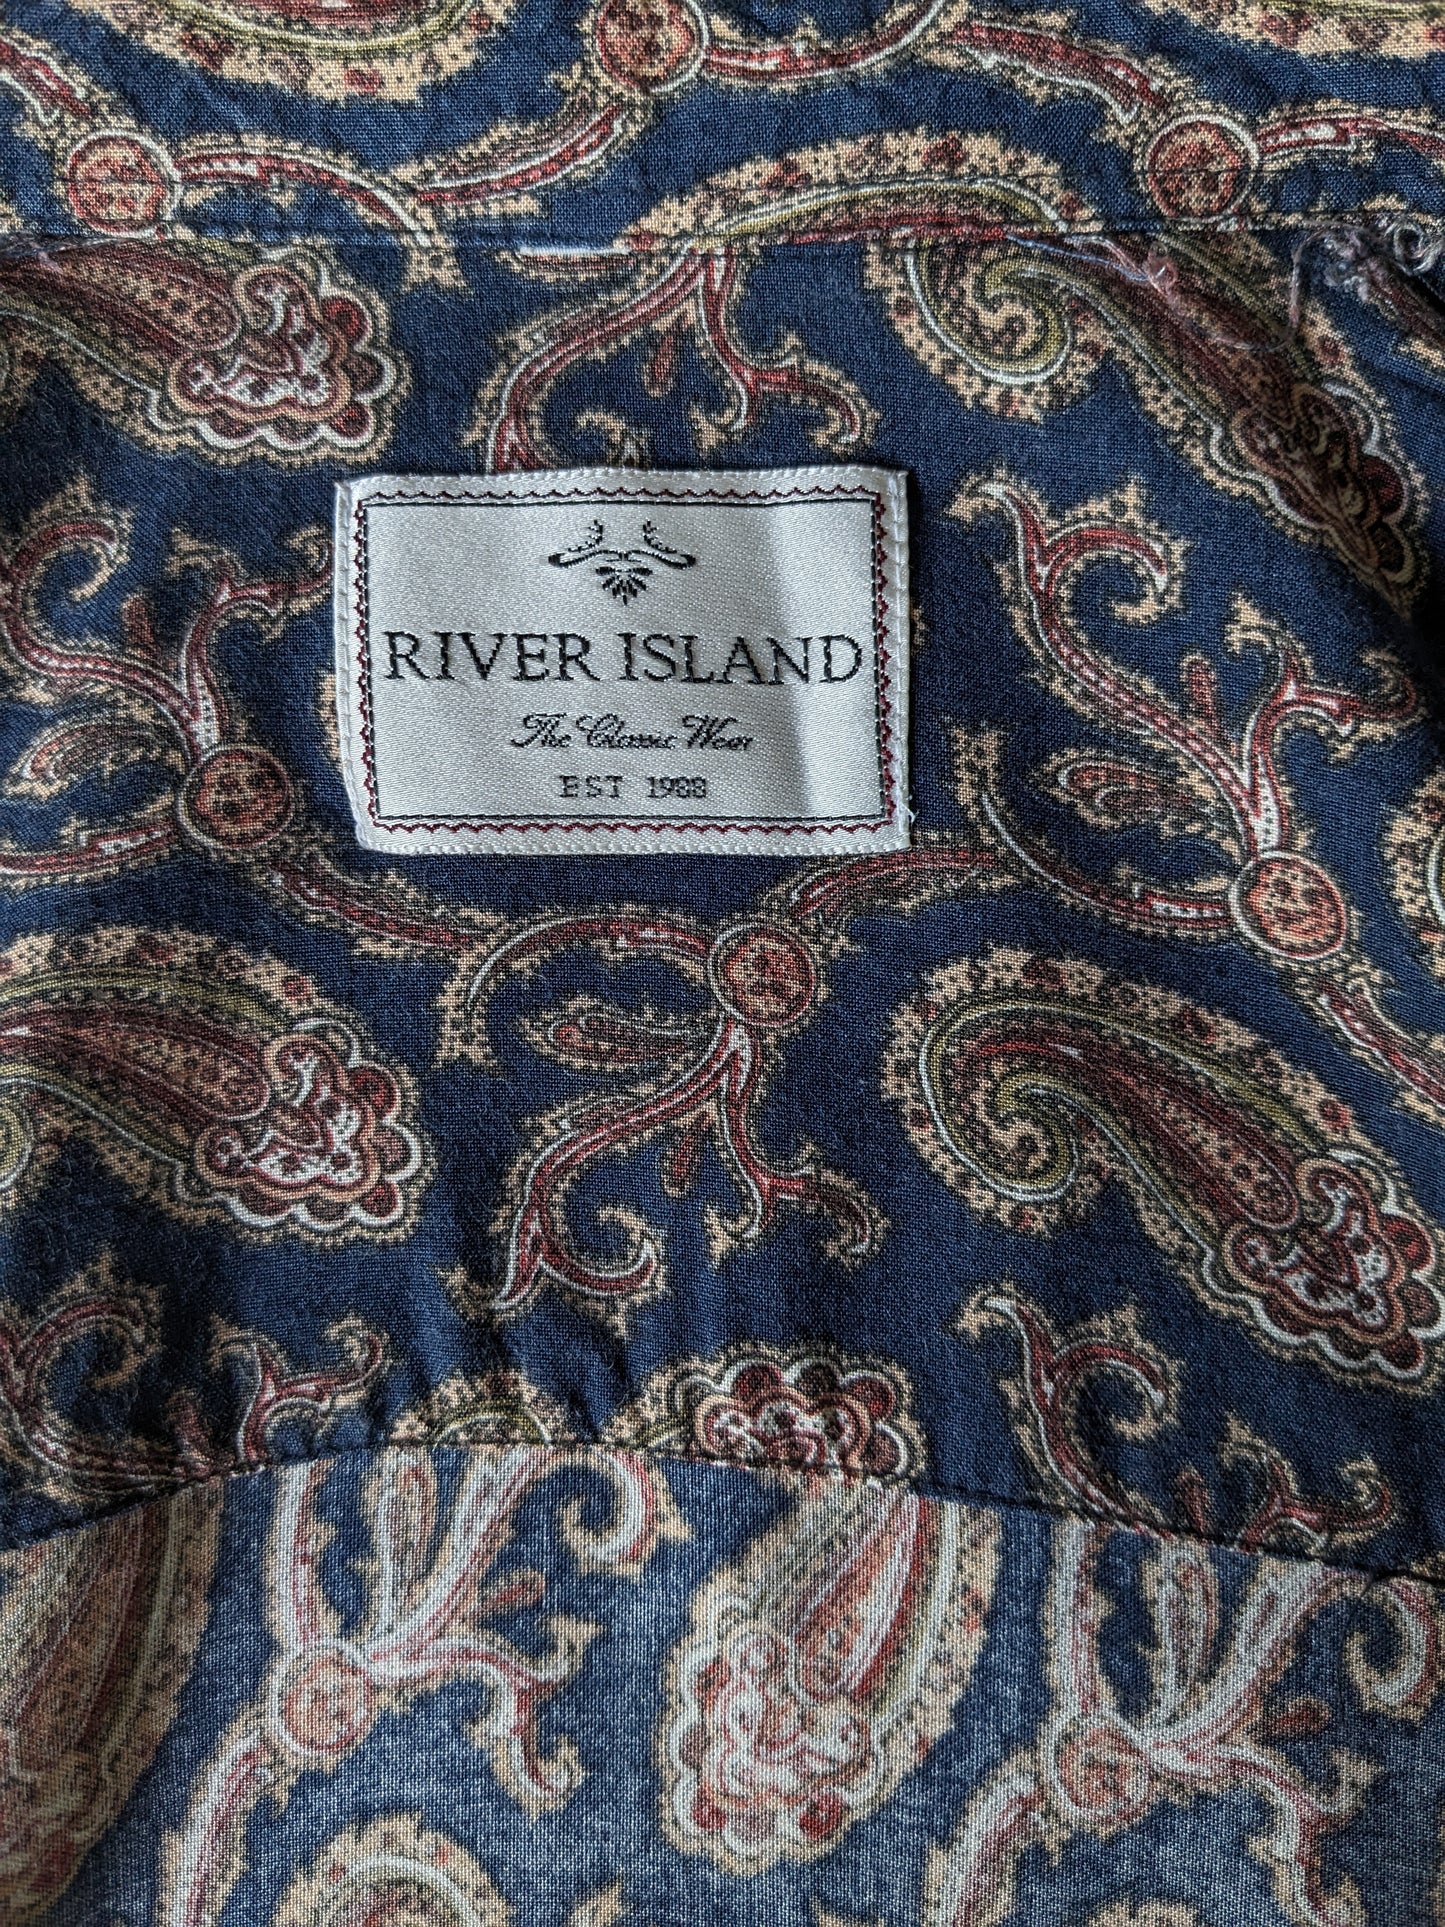 River Island overhemd. Rood Blauw Groene Paisley print. Maat M.